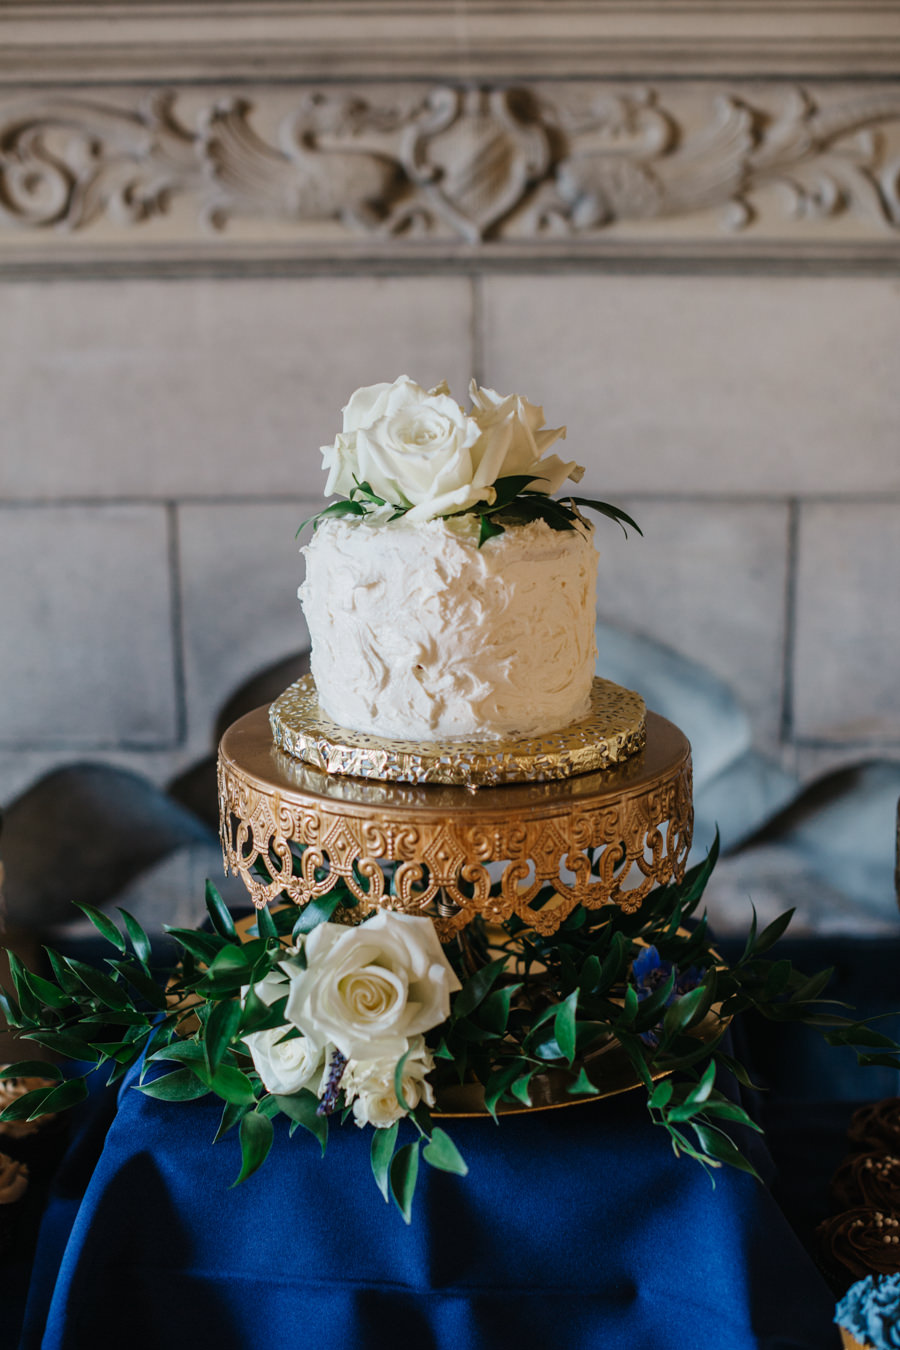 Single Tier, Round, White Wedding Cake on Gold Display with White Roses